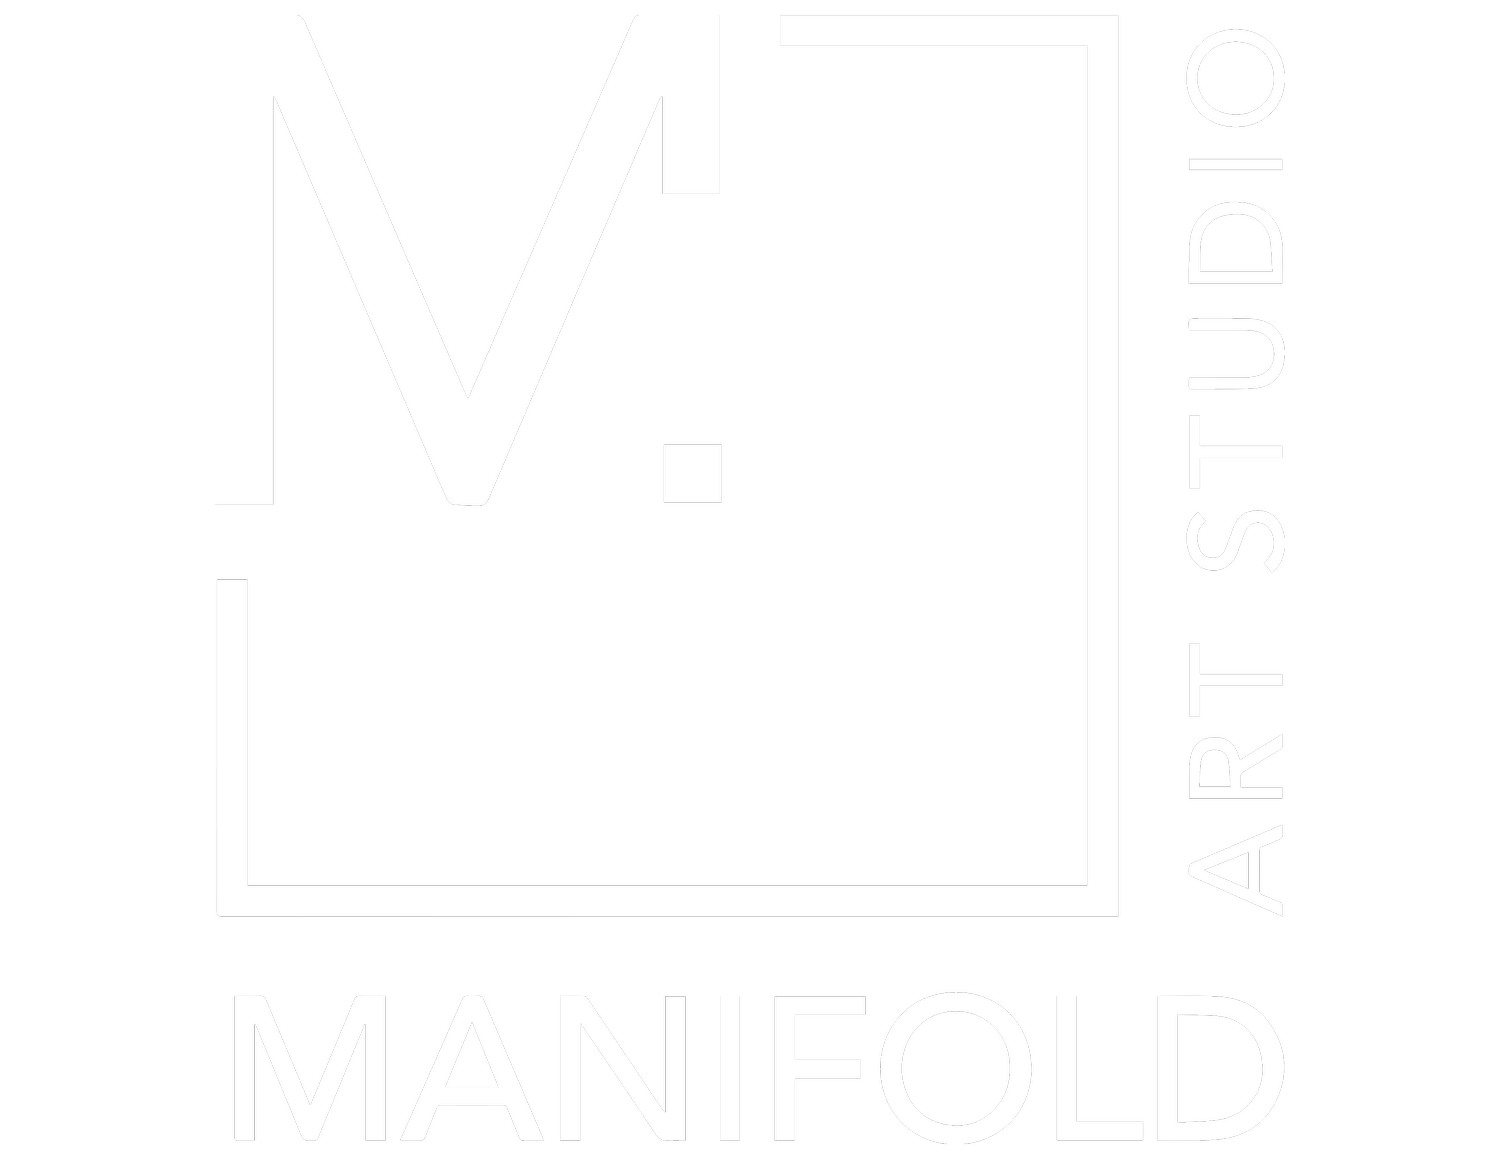 MANIFOLD ART STUDIO